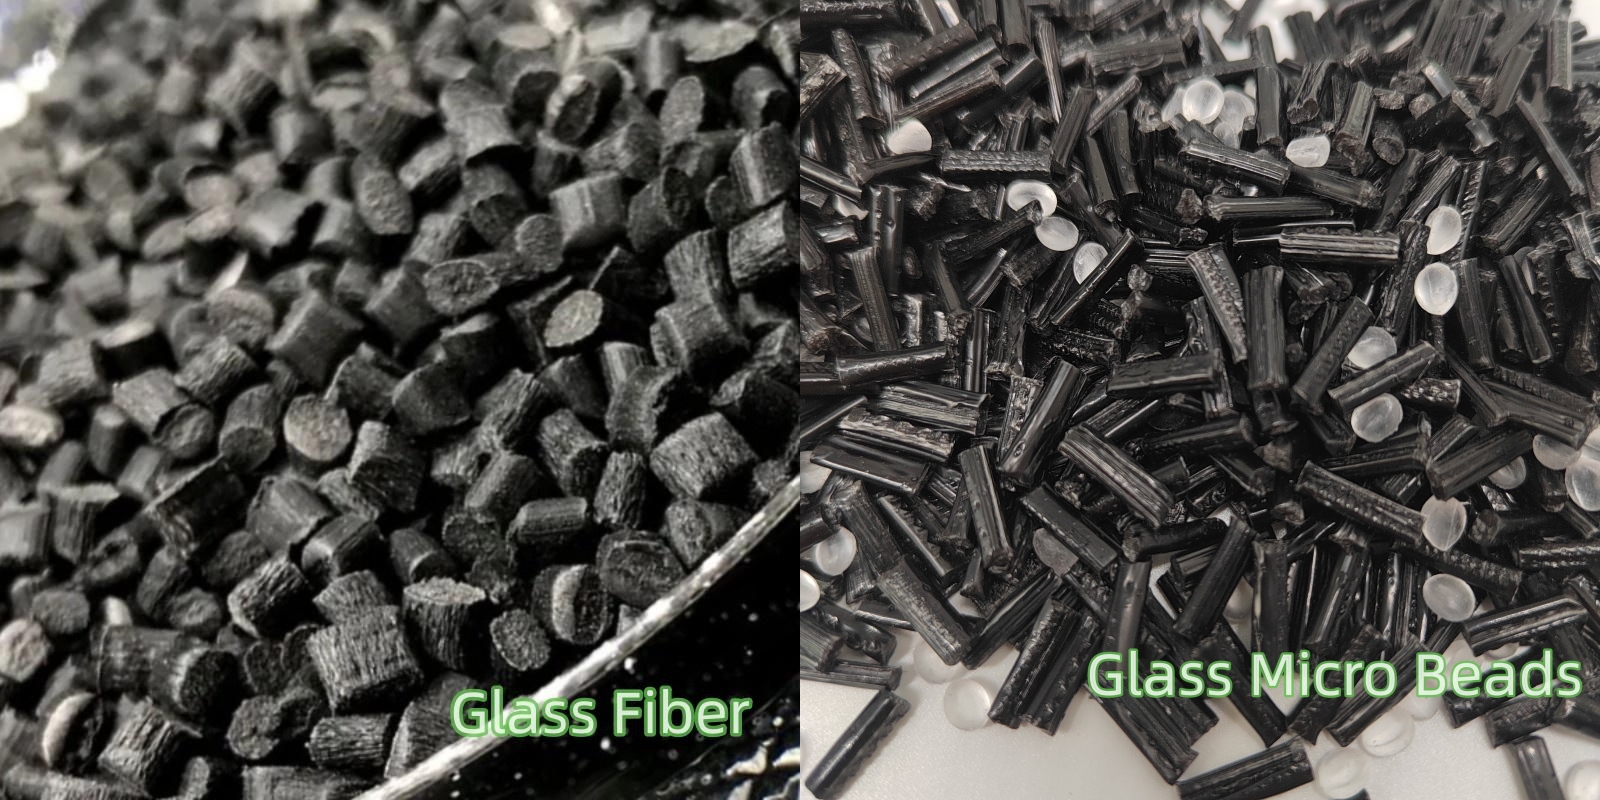 Micro Beads And Glass Fiber.jpg